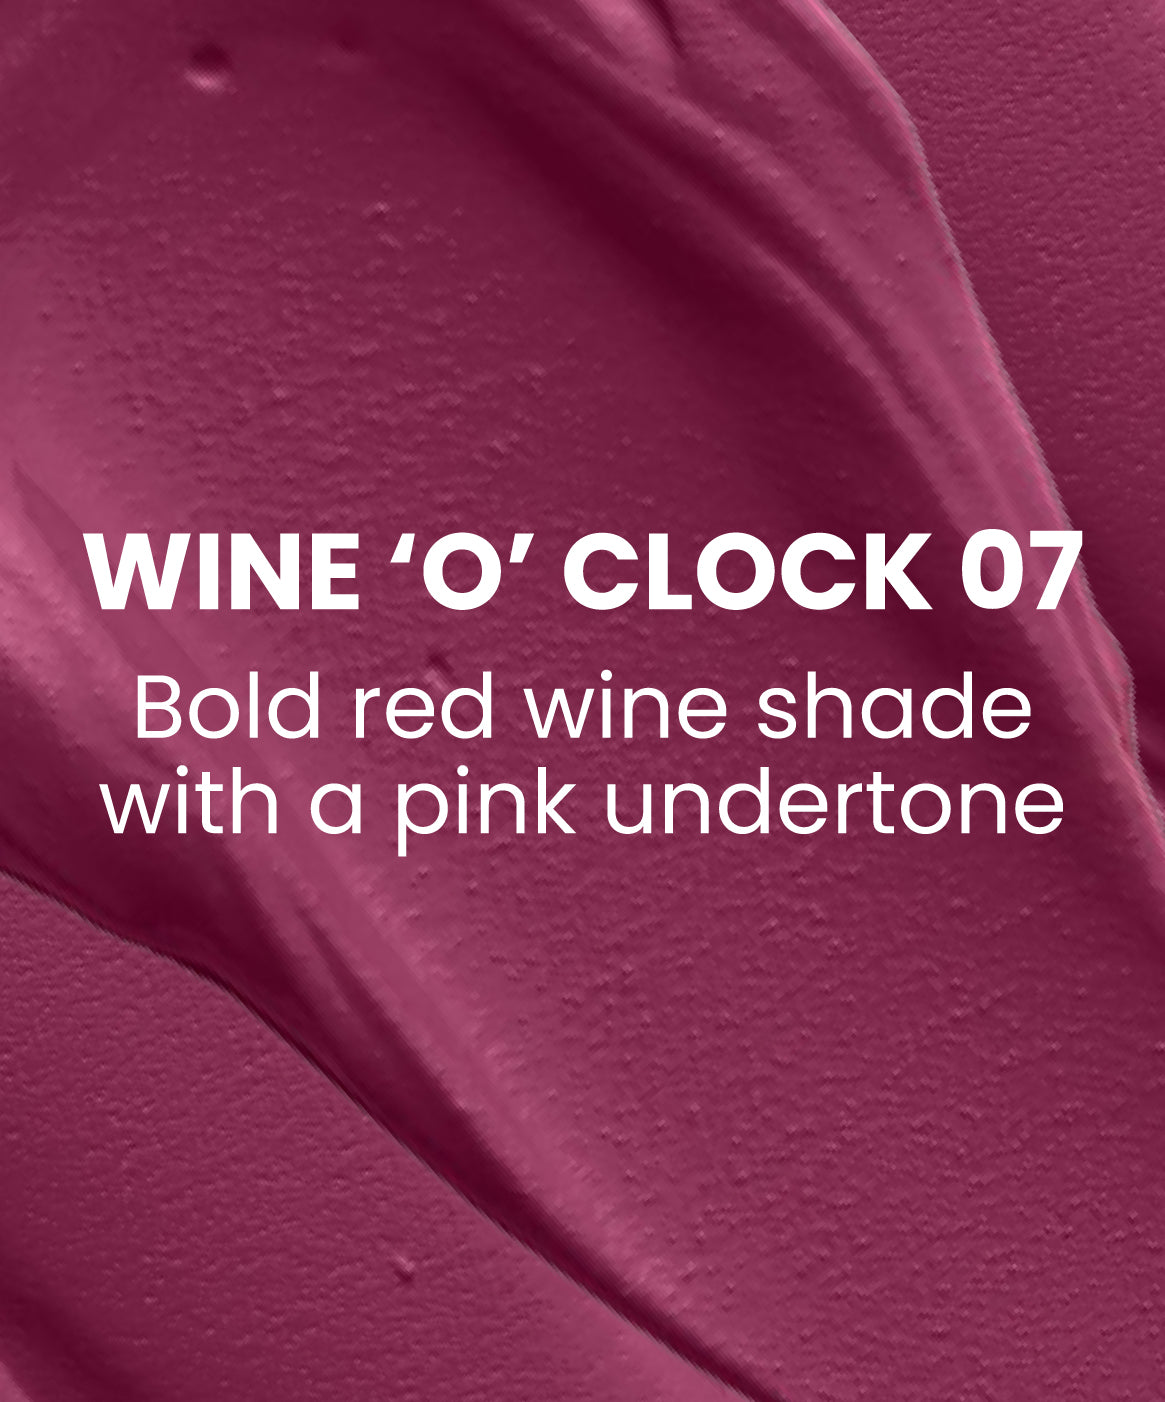 Wine O Clock 07 - Bold red wine shade